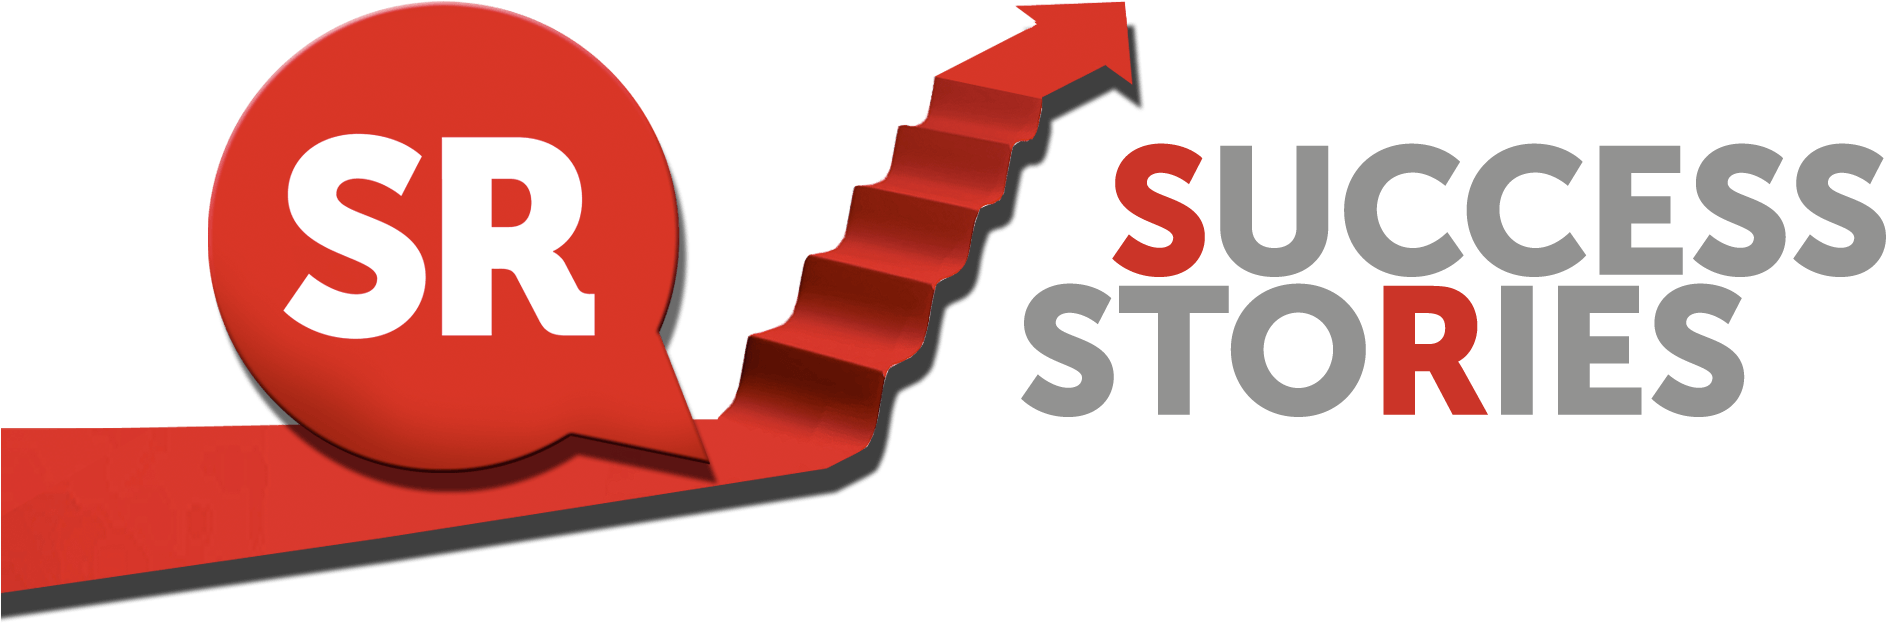 Ray Ban Success Story - Success Stories Logo (2000x777)